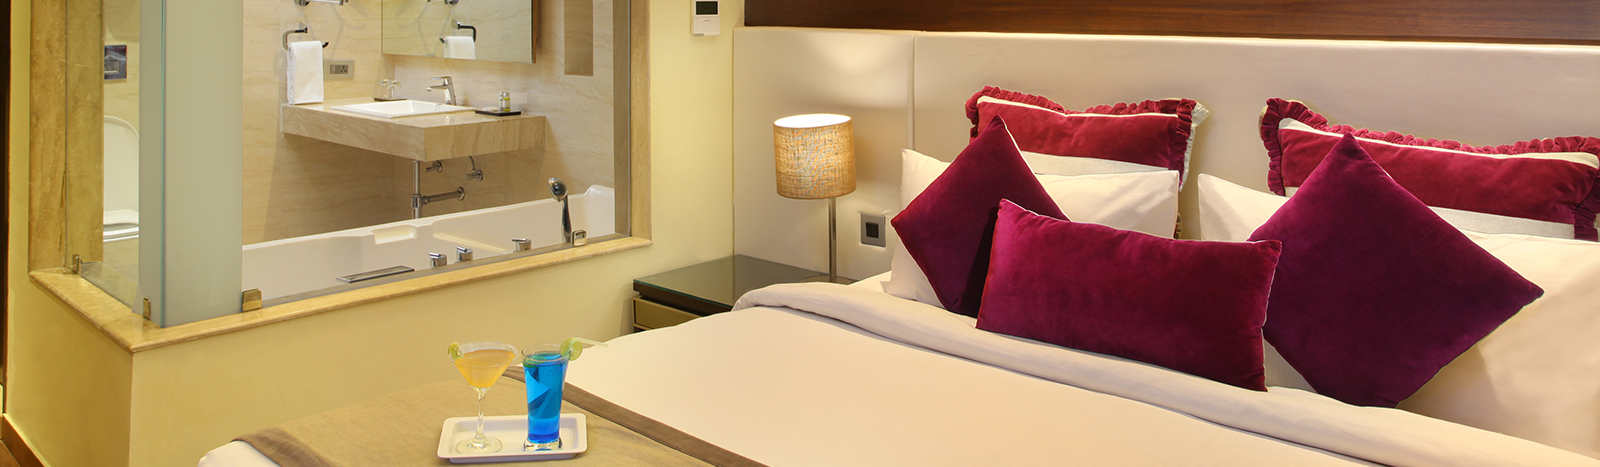 Accommodation - hotels in shimla kufri